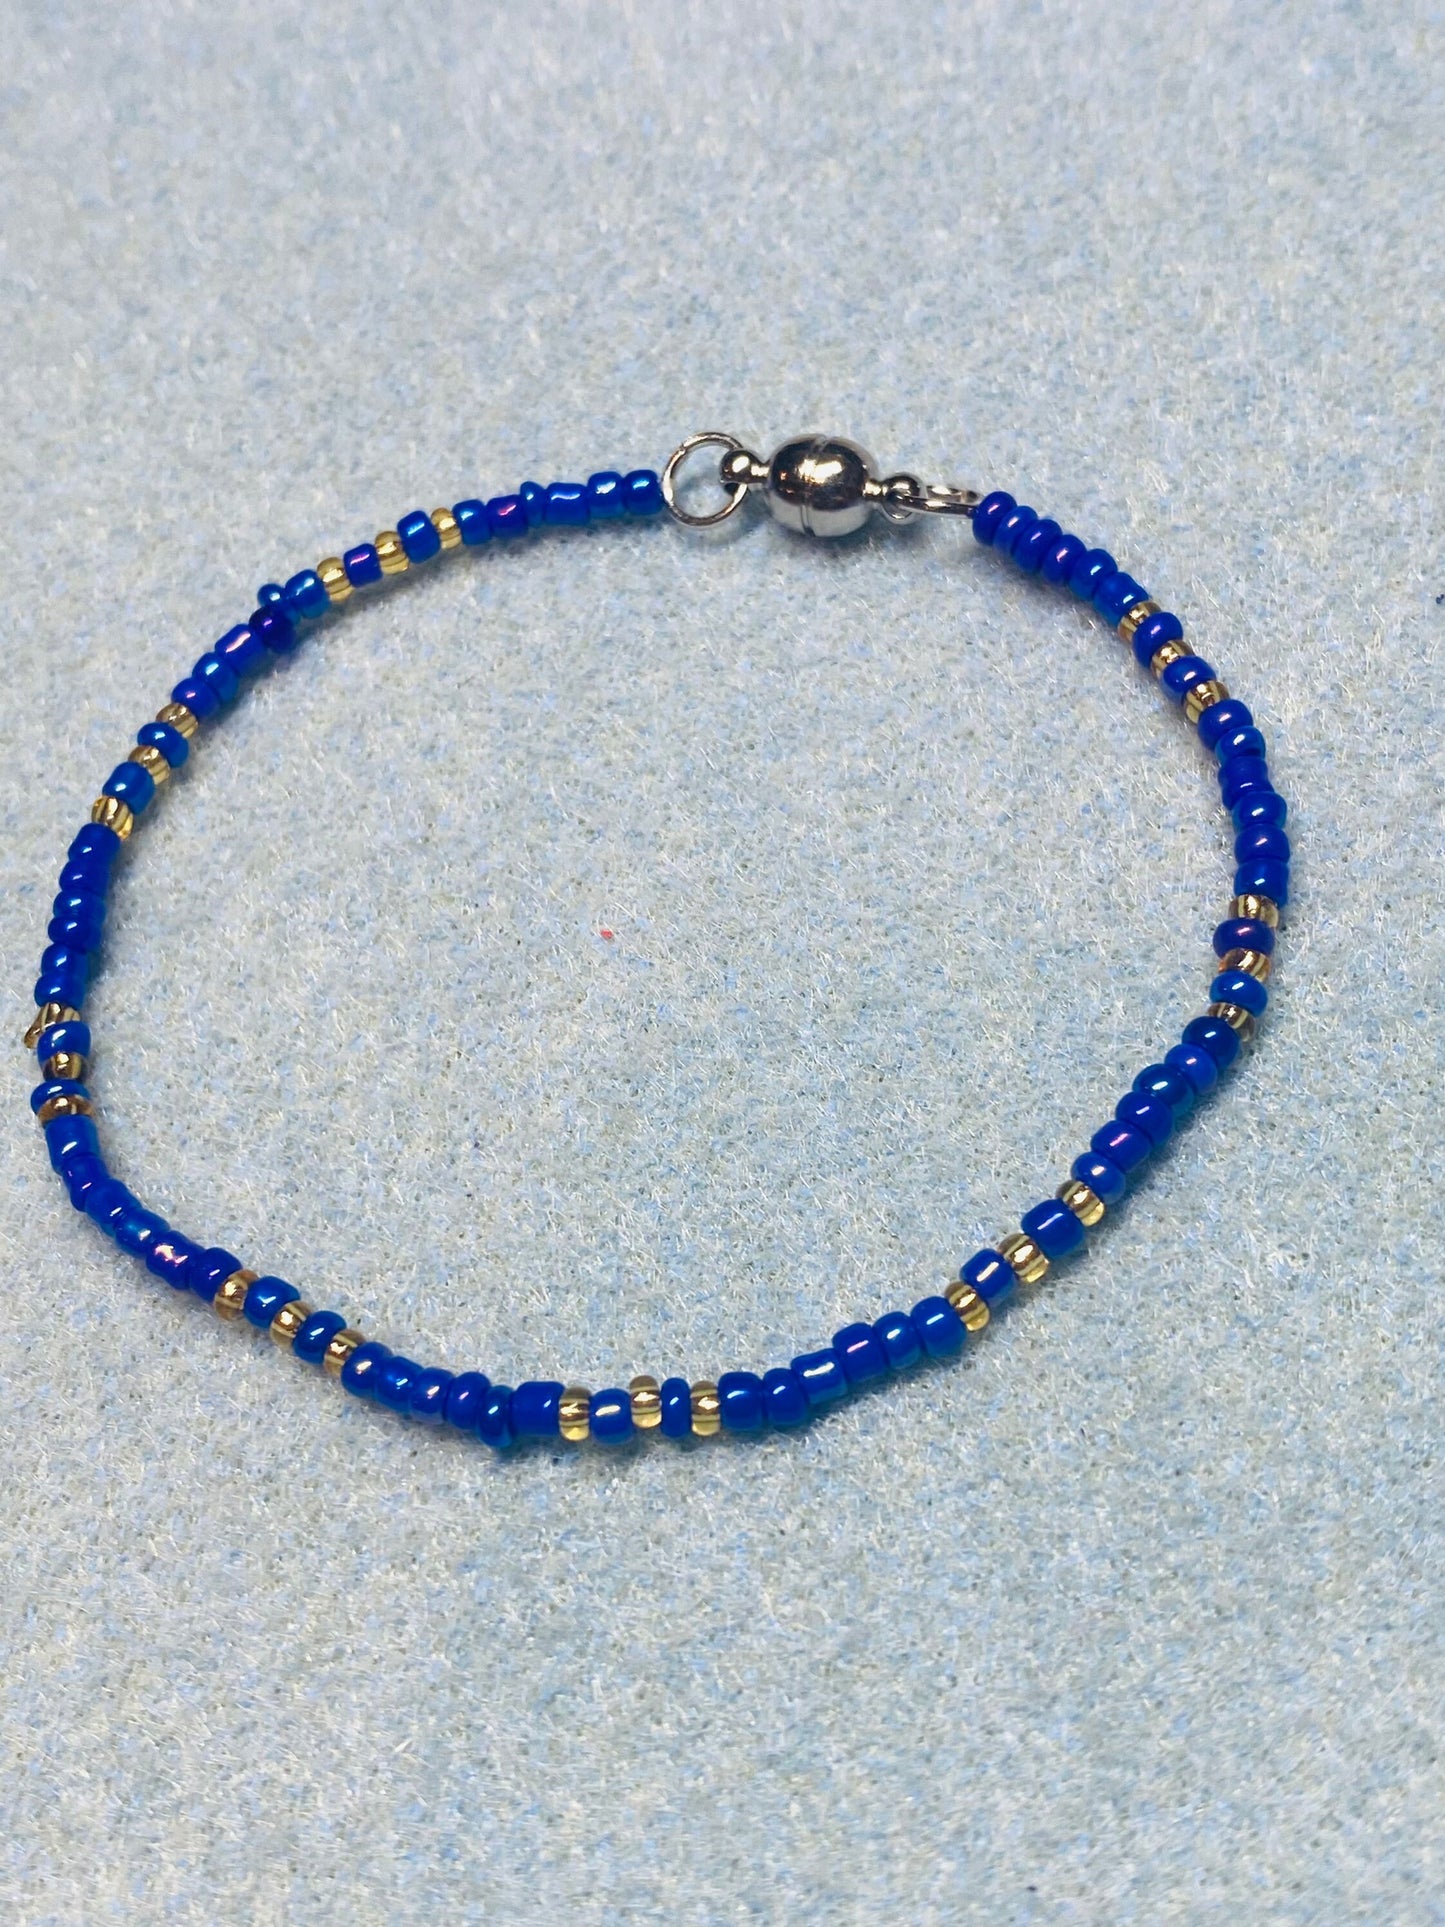 Blue and gold beaded bracelet